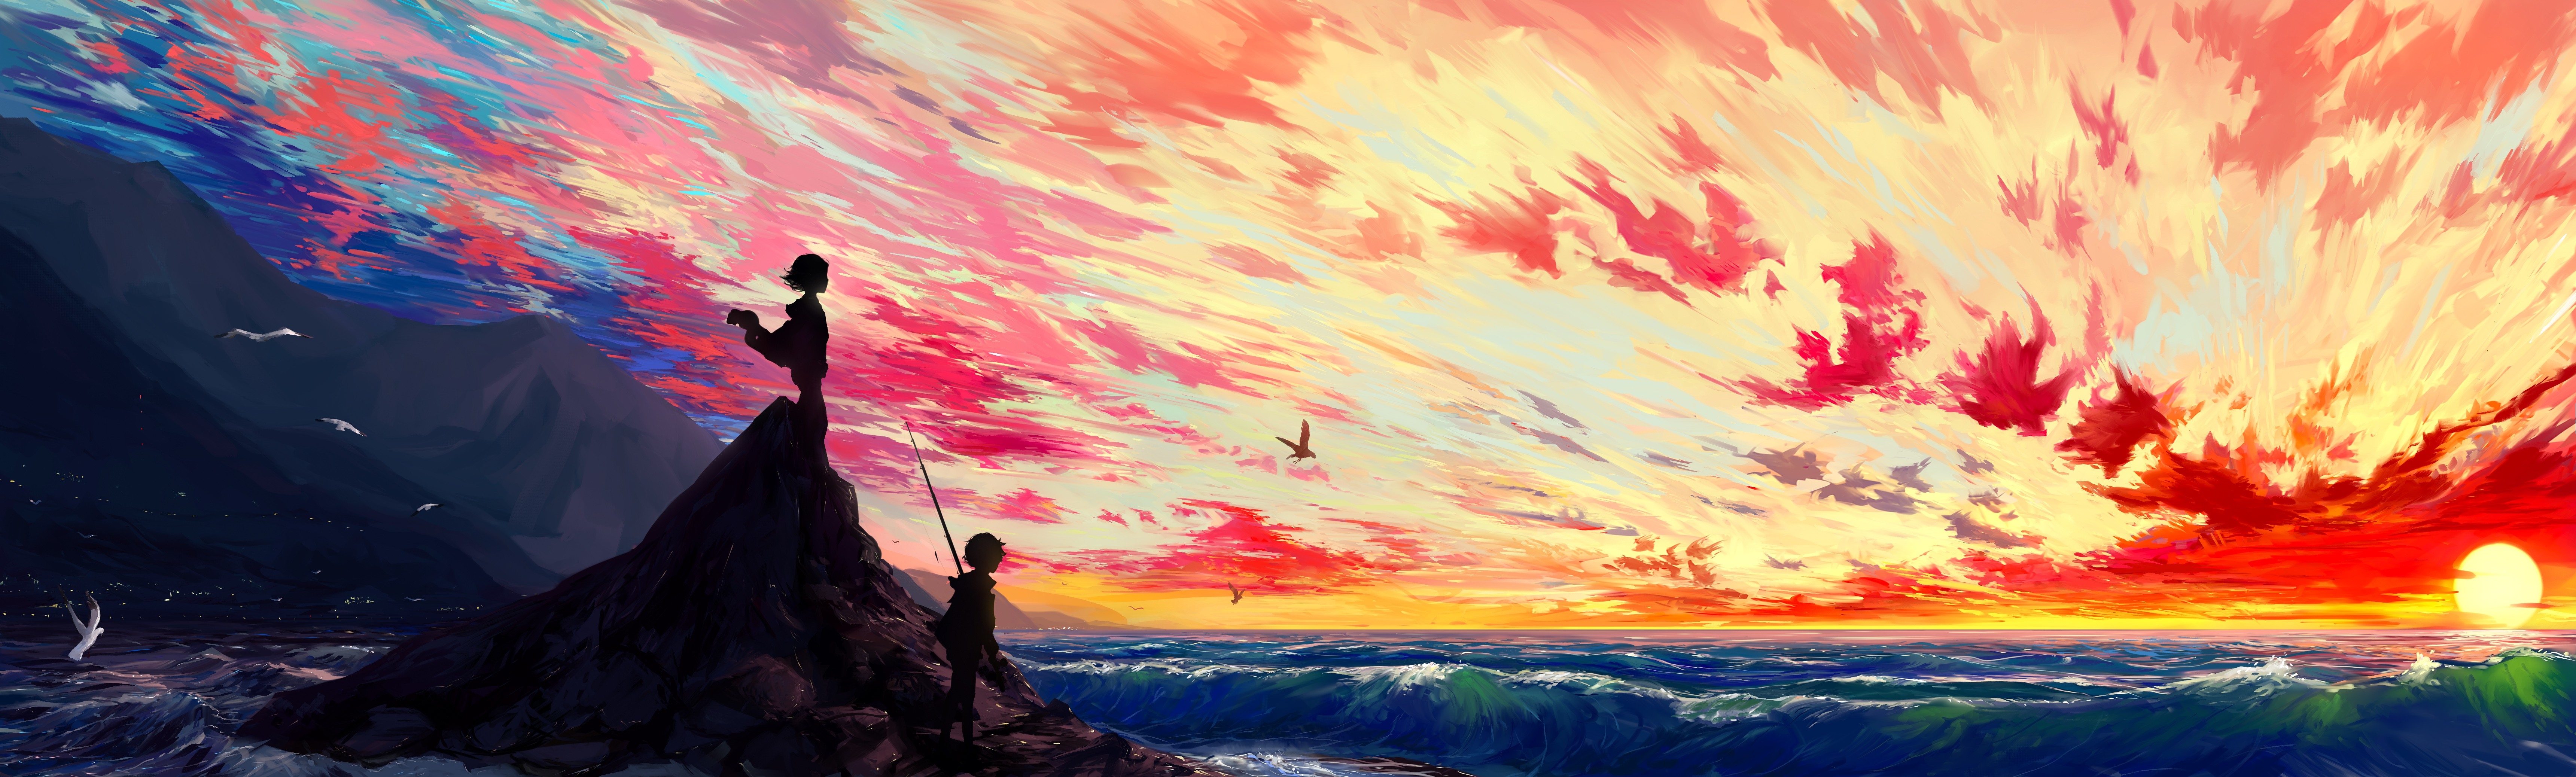 Wallpapers scenic illustration anime landscape on the desktop